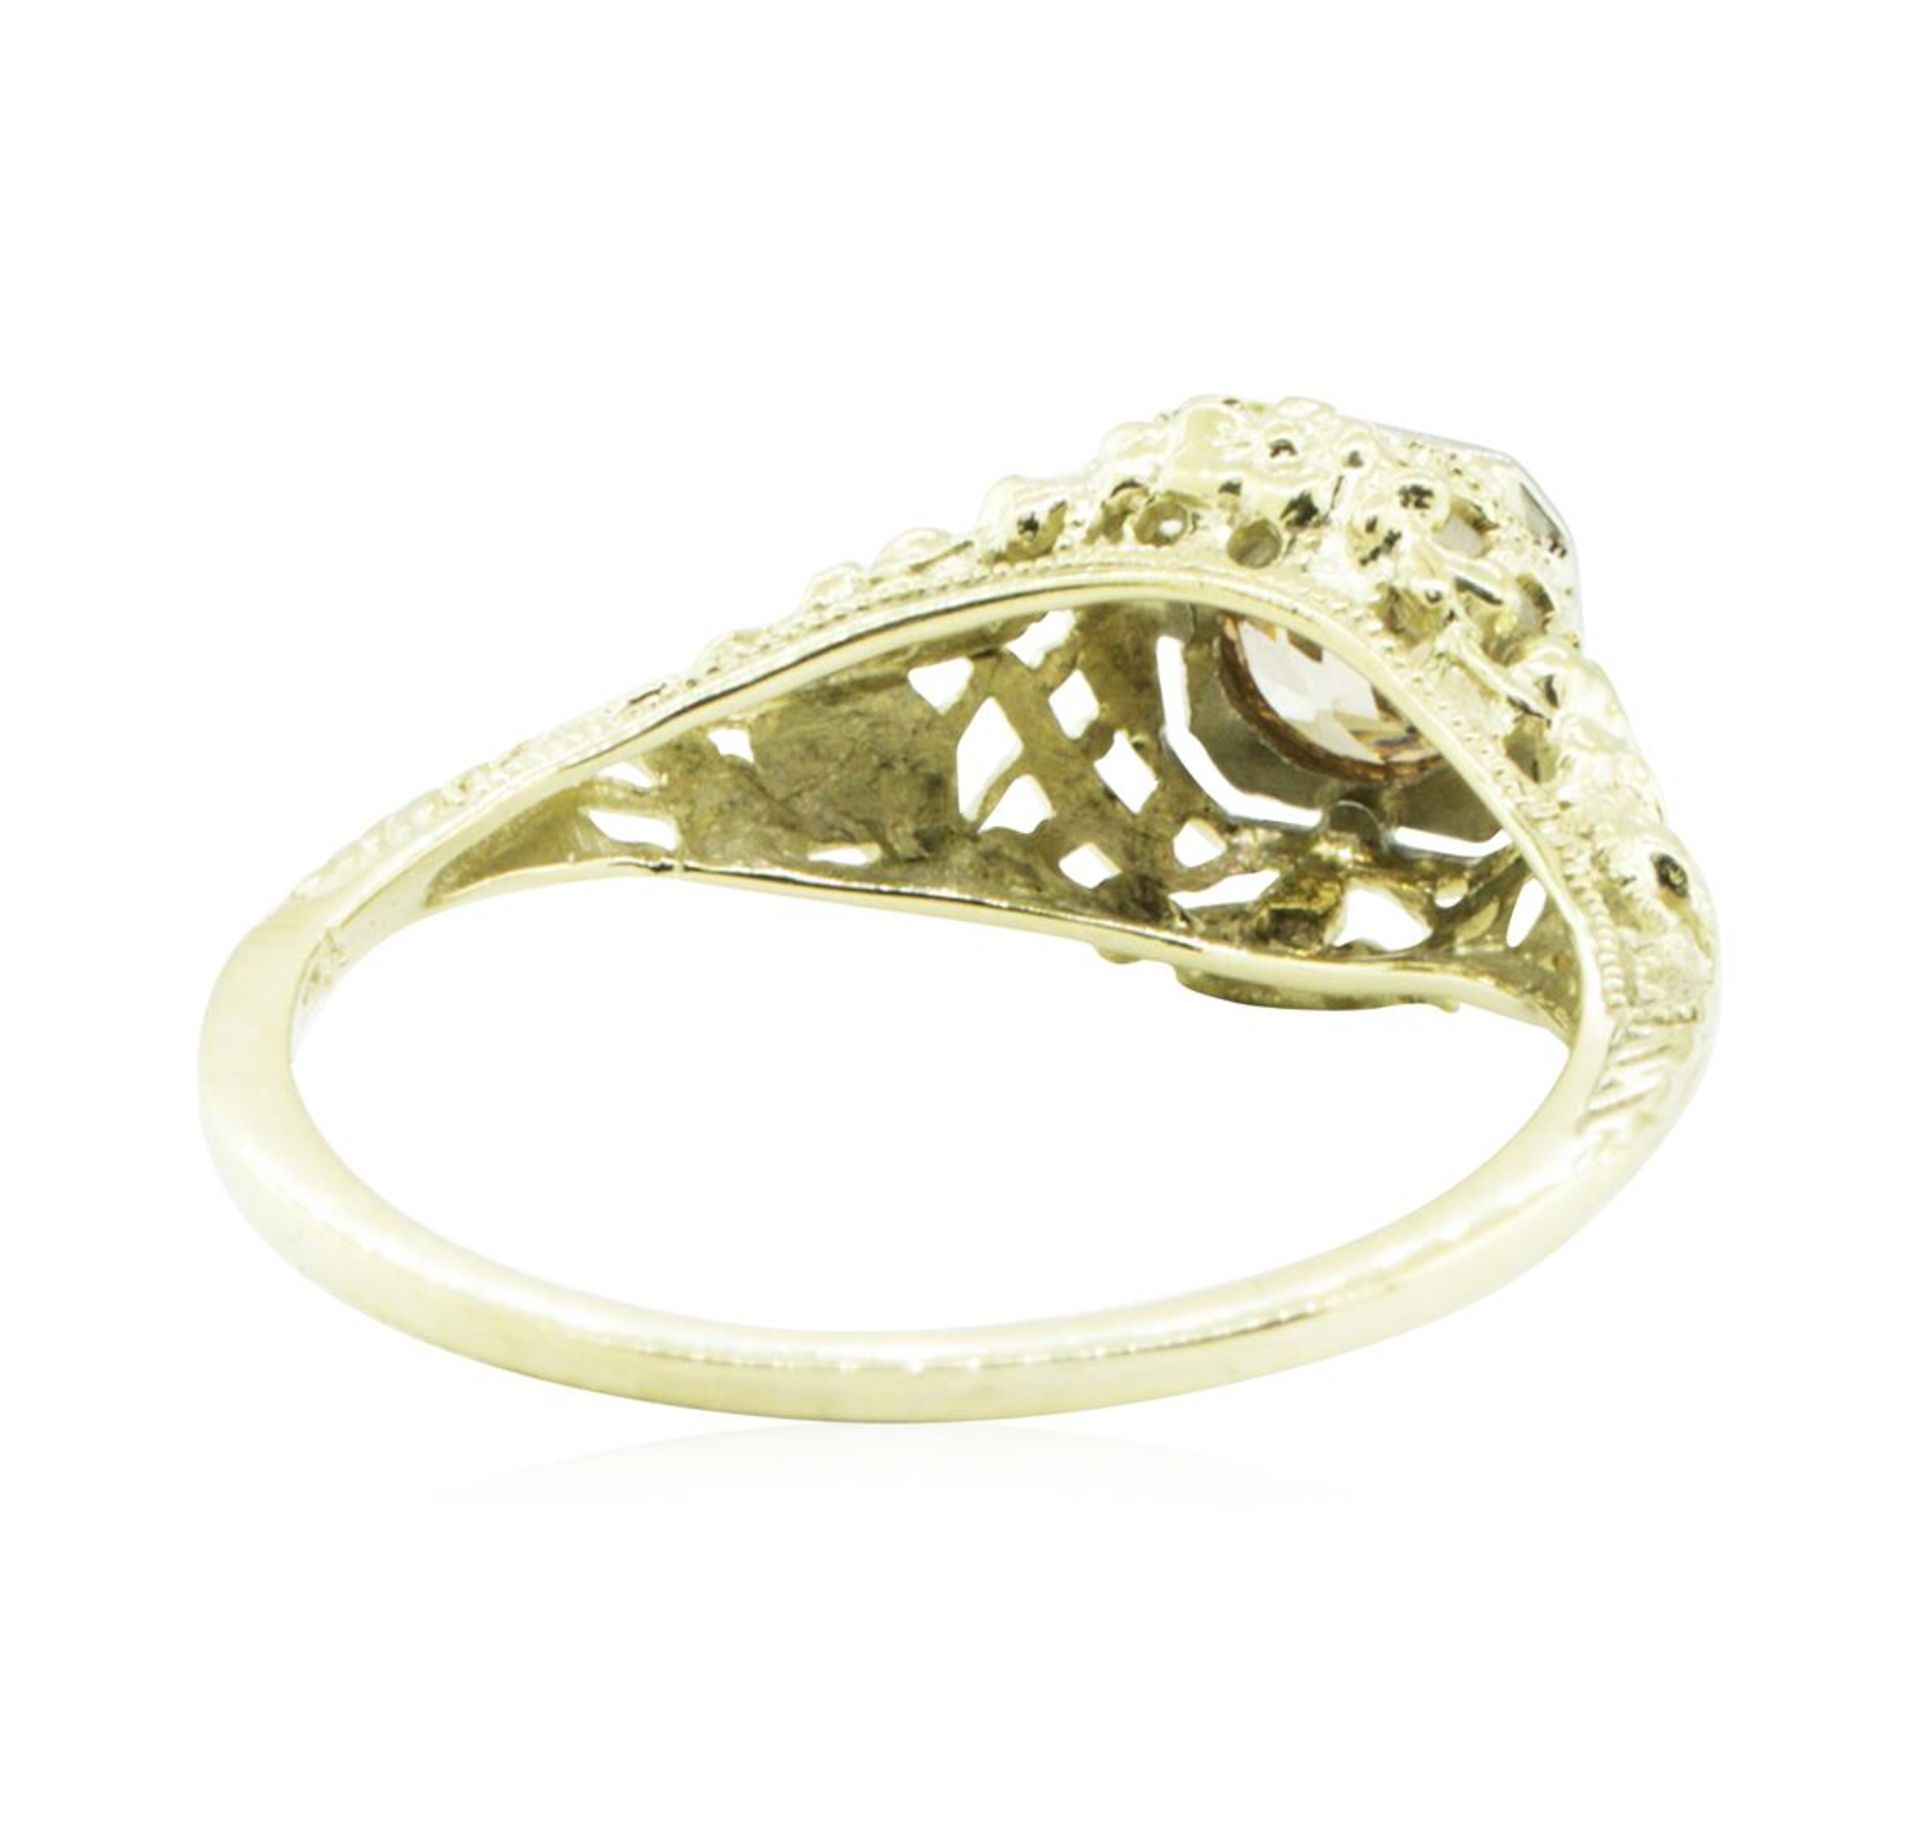 0.30 ctw Diamond Ring - 14KT Yellow Gold - Image 5 of 8